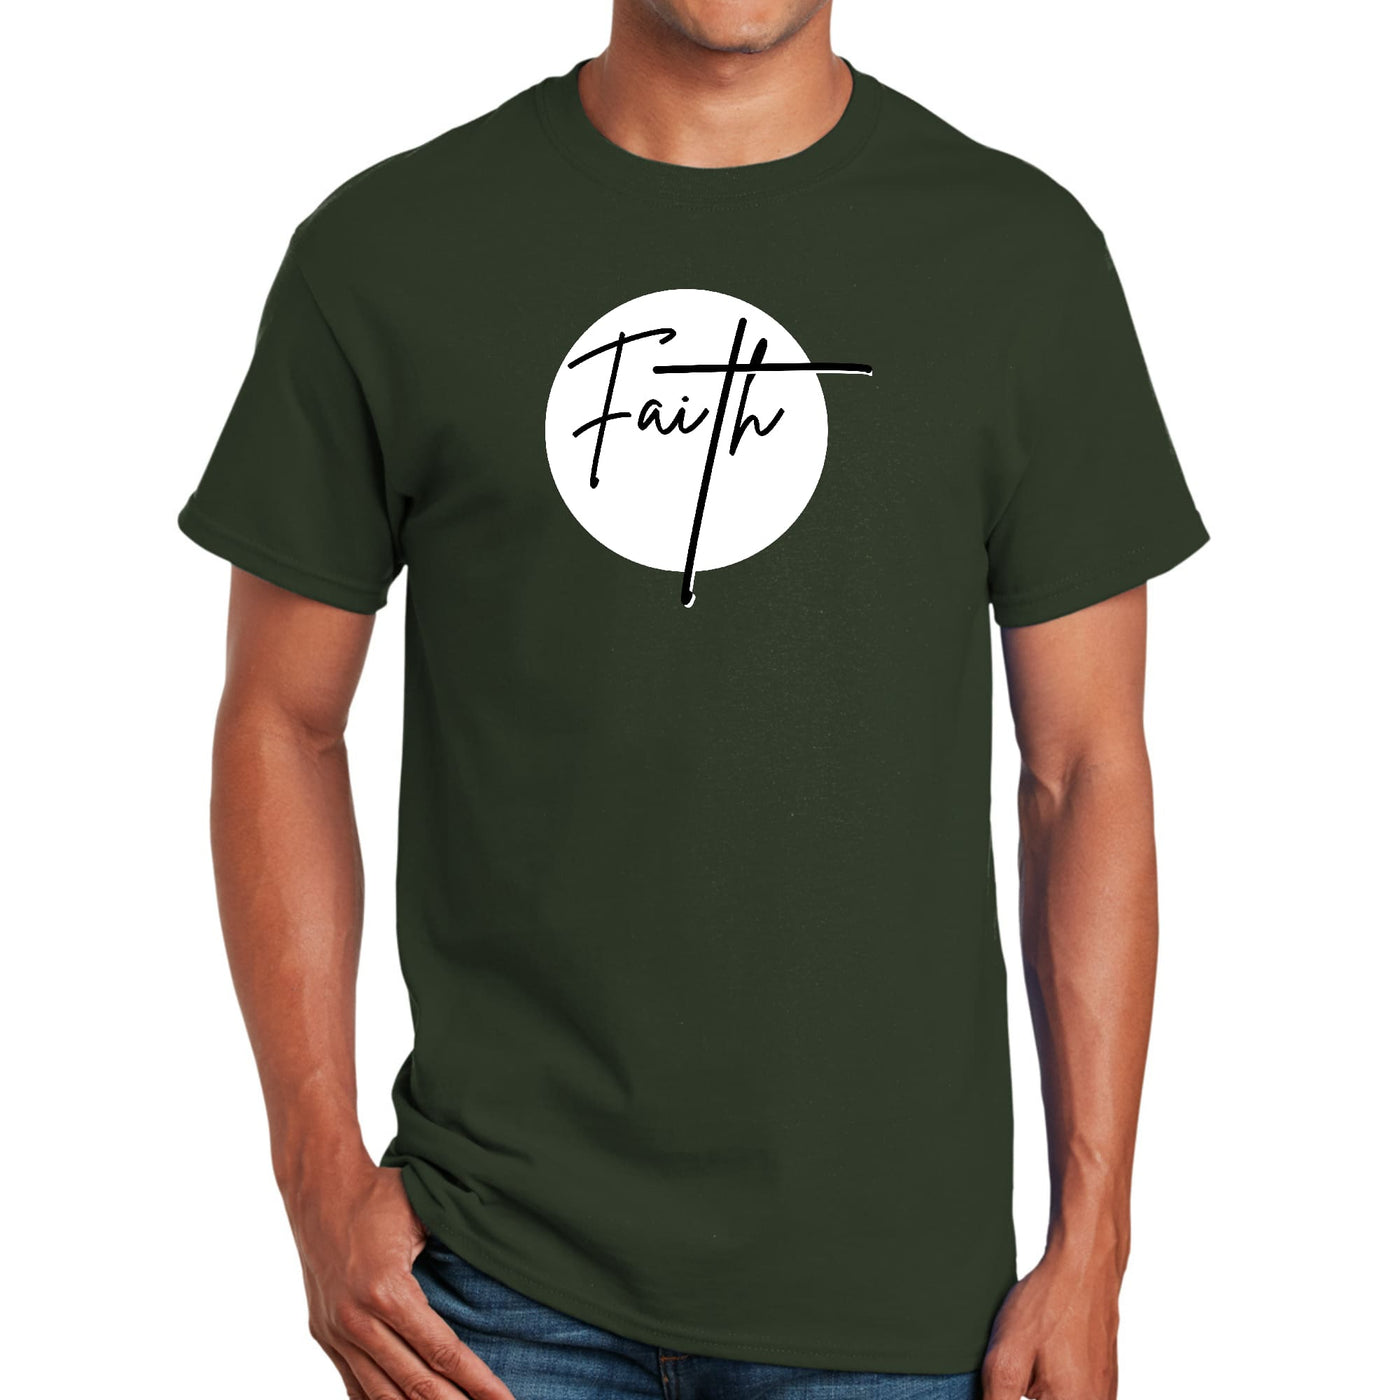 Mens Graphic T-shirt Faith Print - Mens | T-Shirts